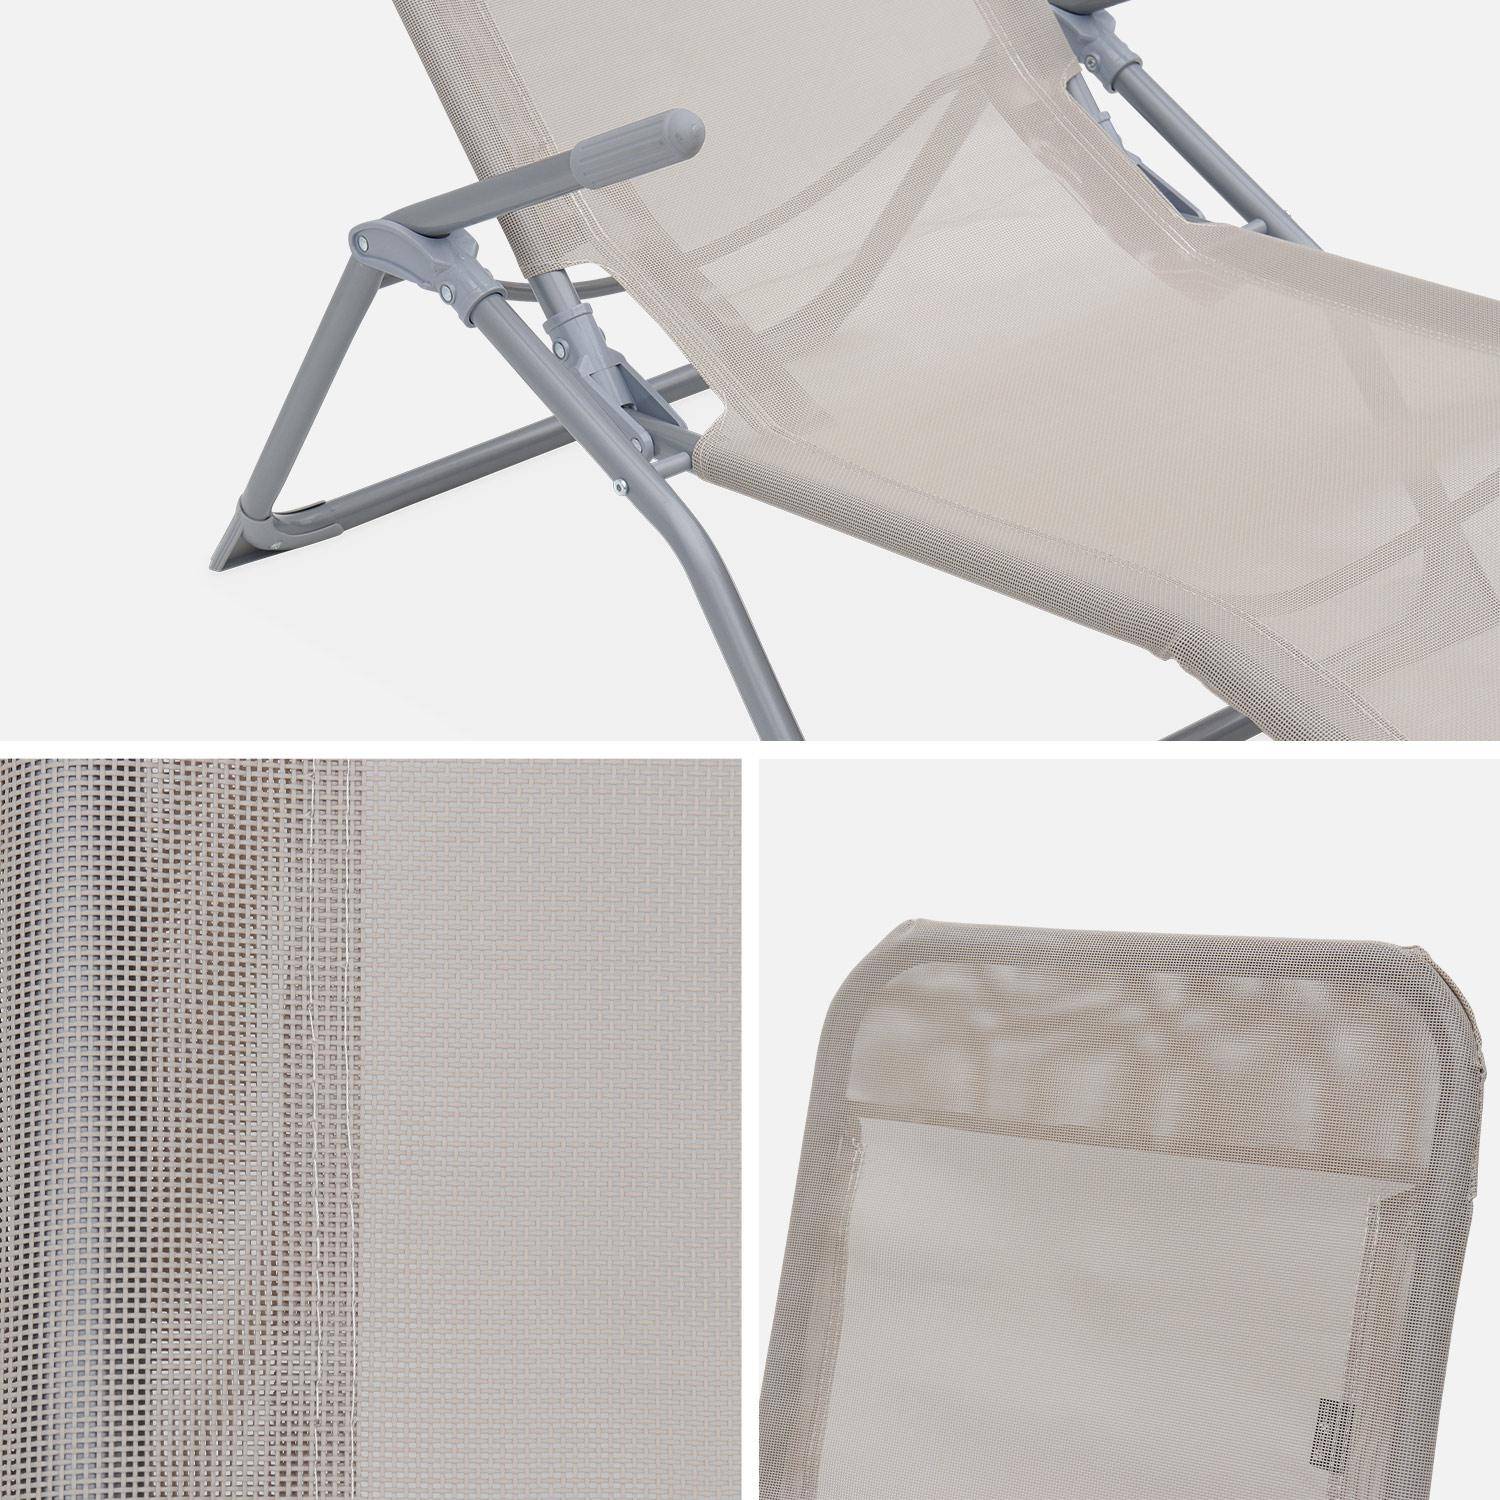 Set van 2 opvouwbare ligstoelen - Levito Taupe - Ligstoelen van textileen, 2 posities, opvouwbare ligstoelen Photo4